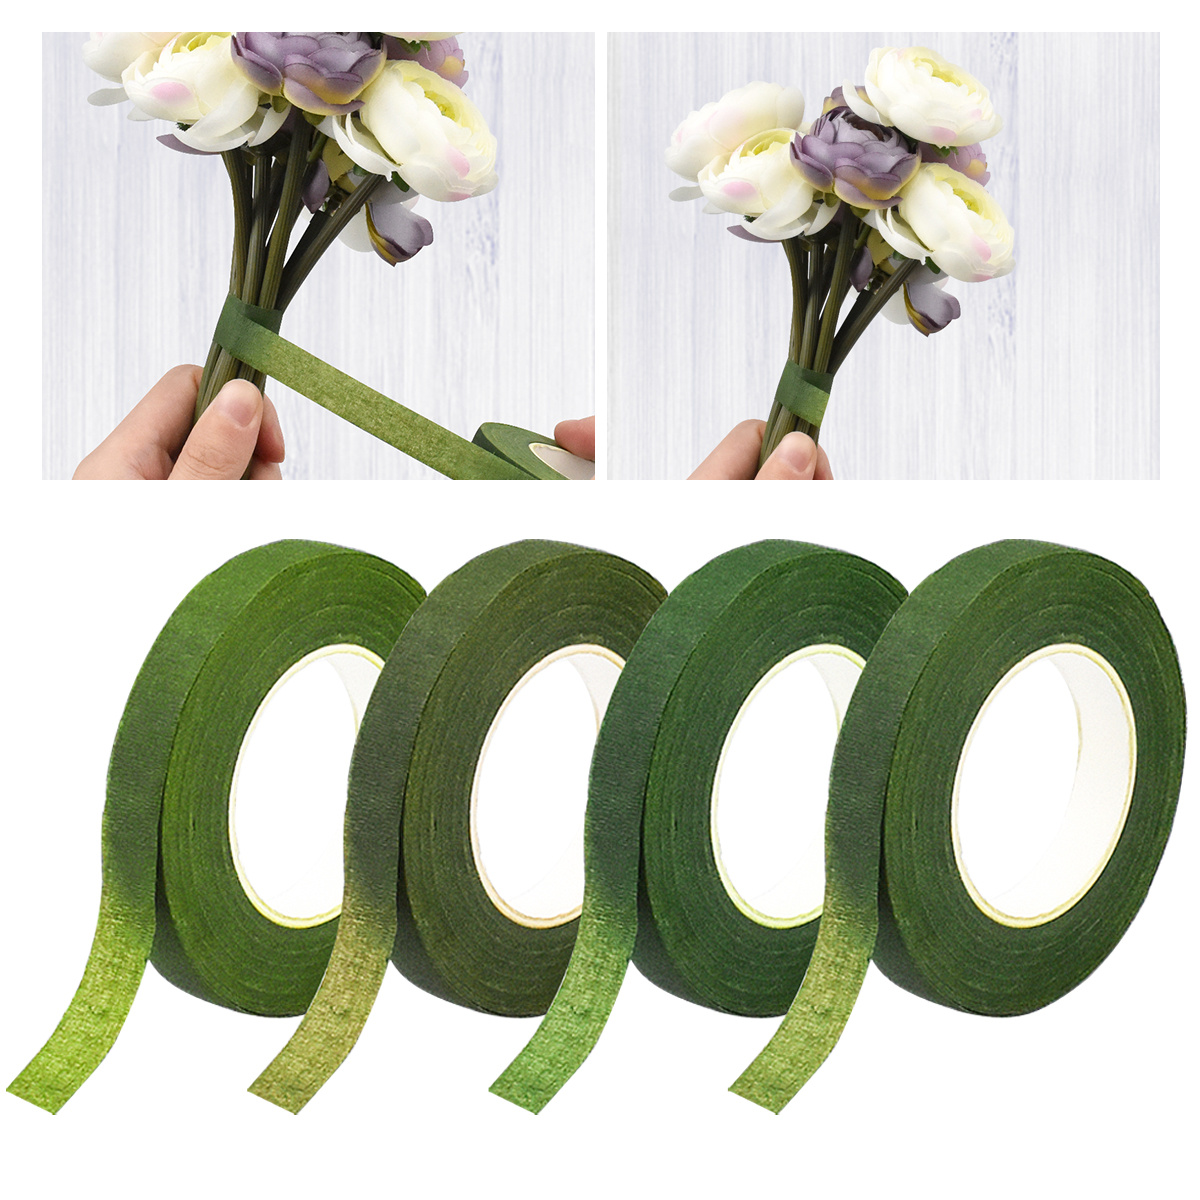 Flower Supplies, Floral Tape, Stem Tape, Bouquet